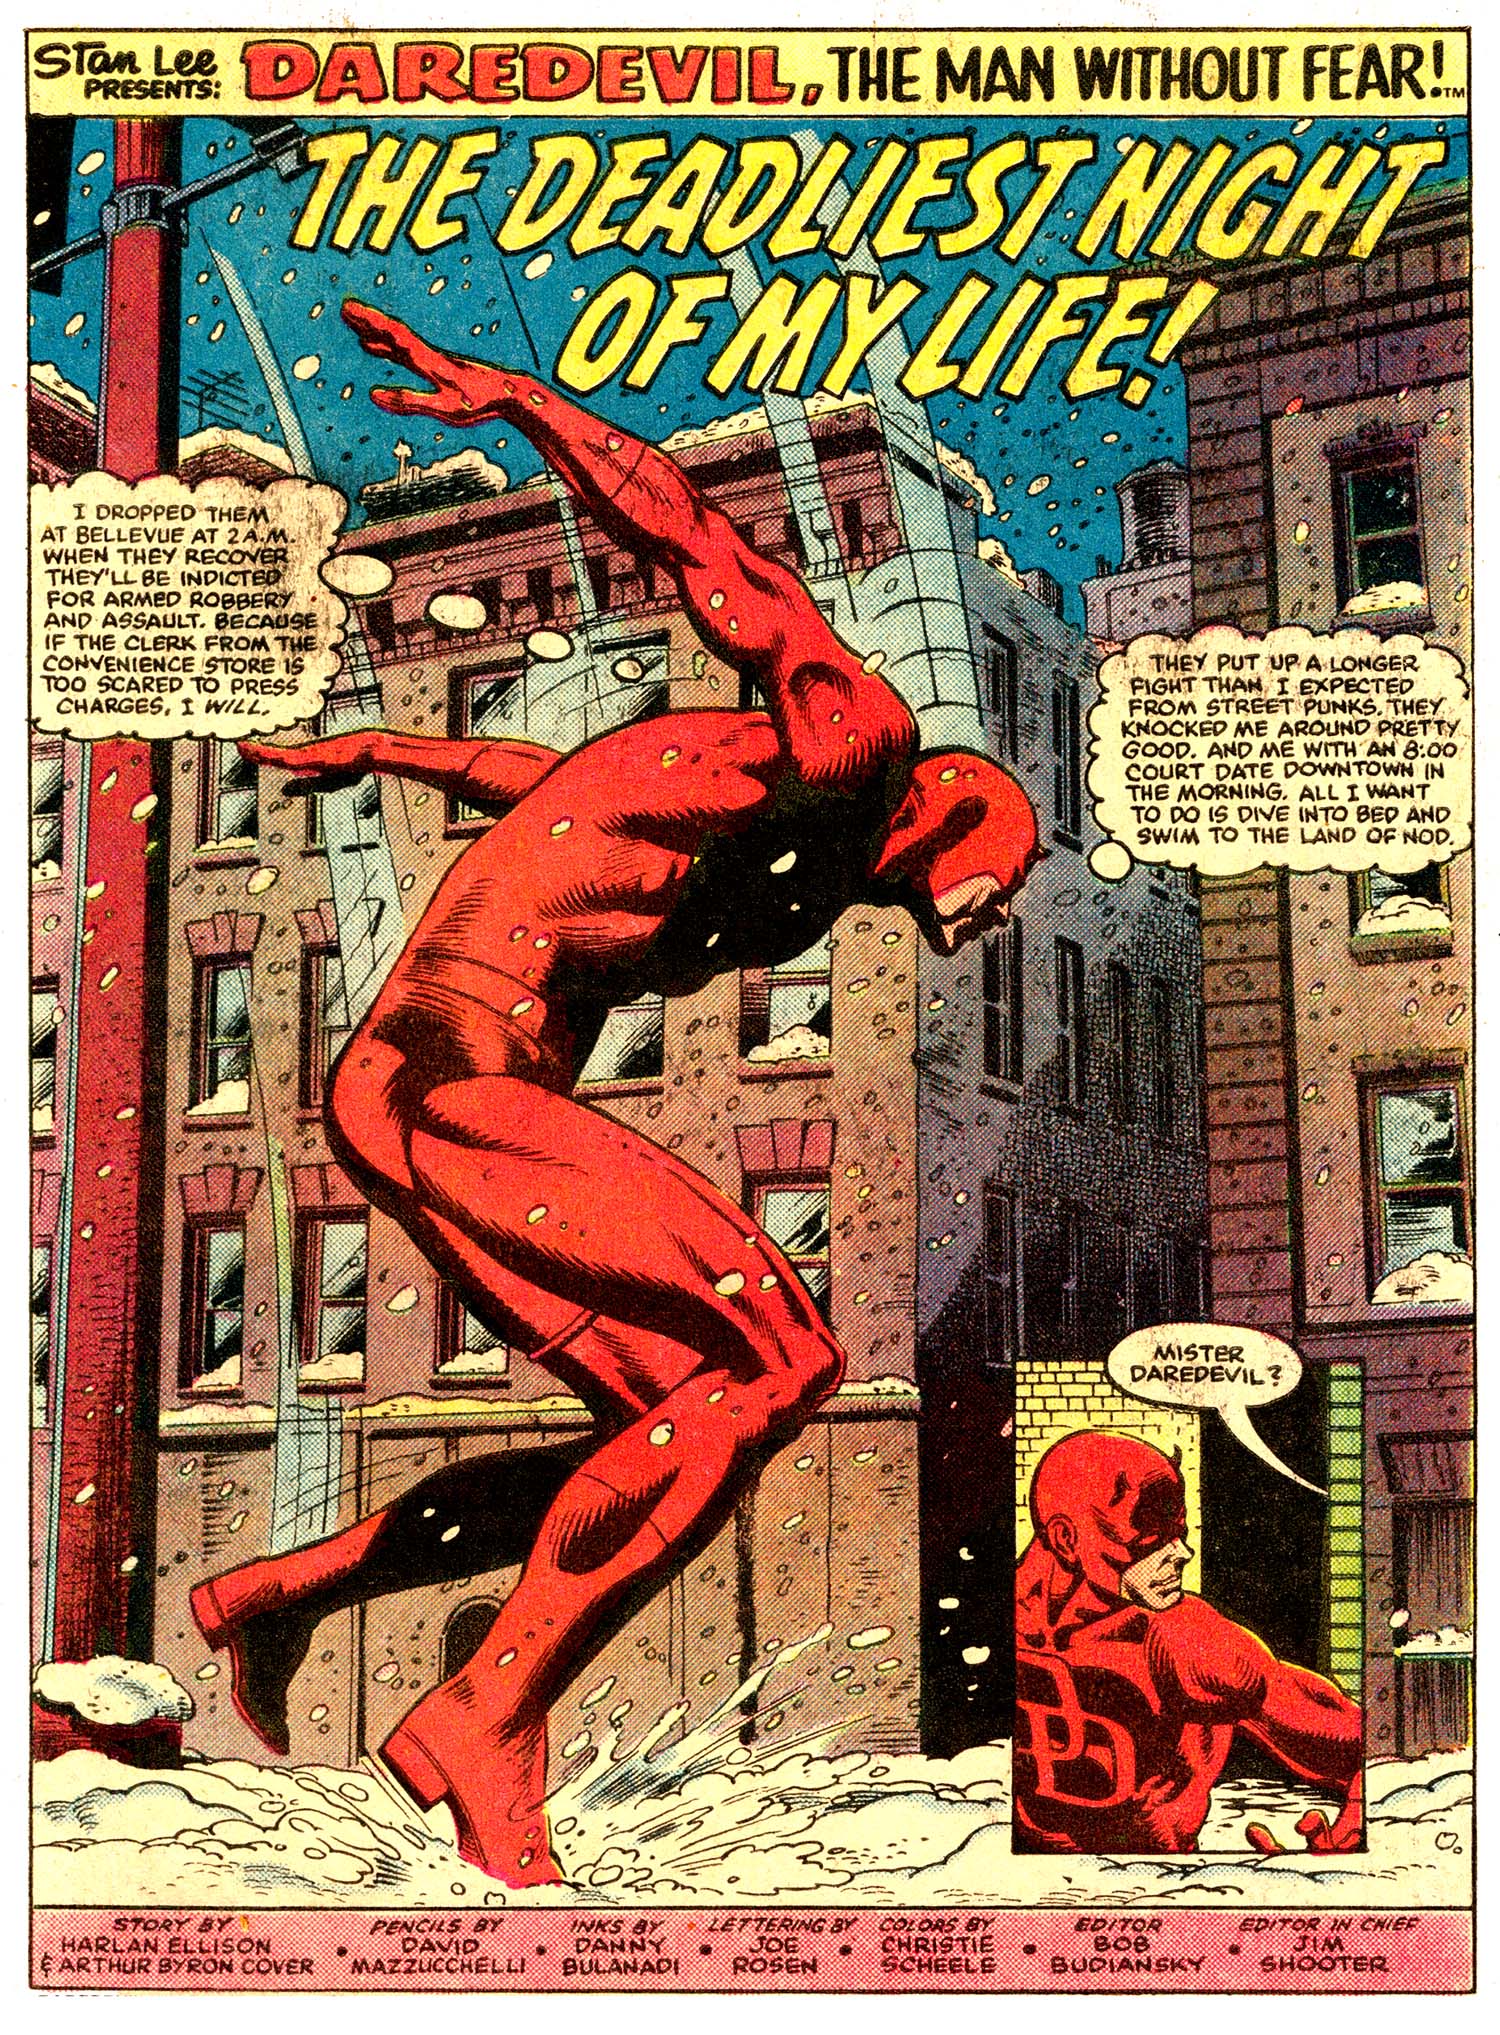 Daredevil #208, art by David Mazzuchelli and Danny Bulandi